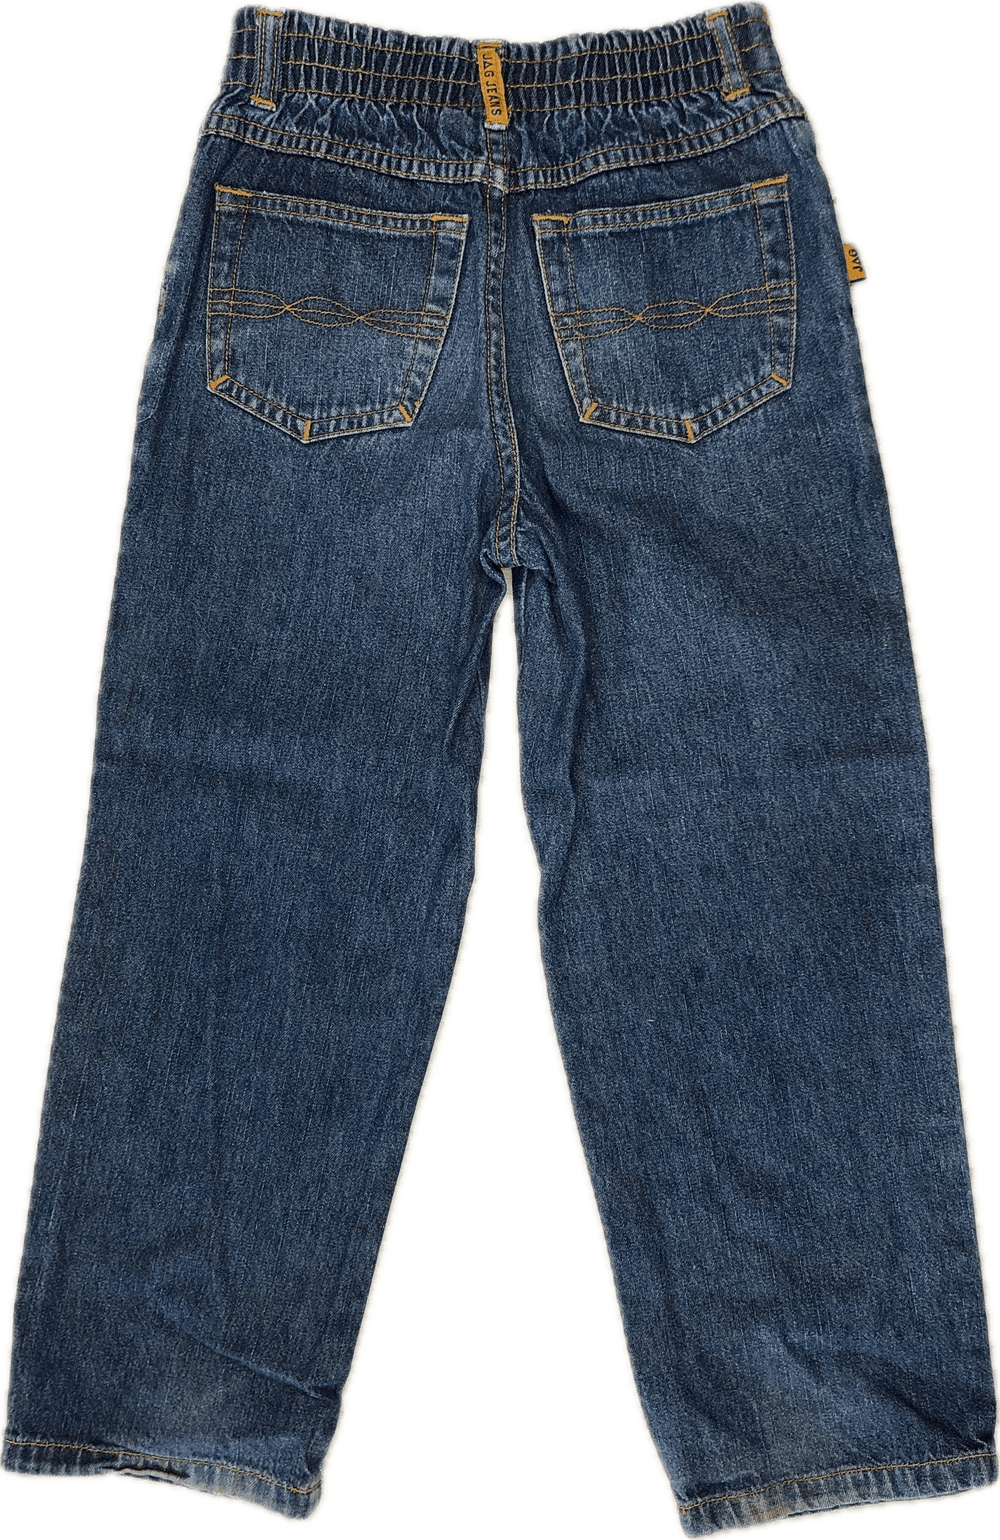 Vintage 90's Classic Kids Jag Jnr. Denim Jeans Size- 5 - Jean Pool